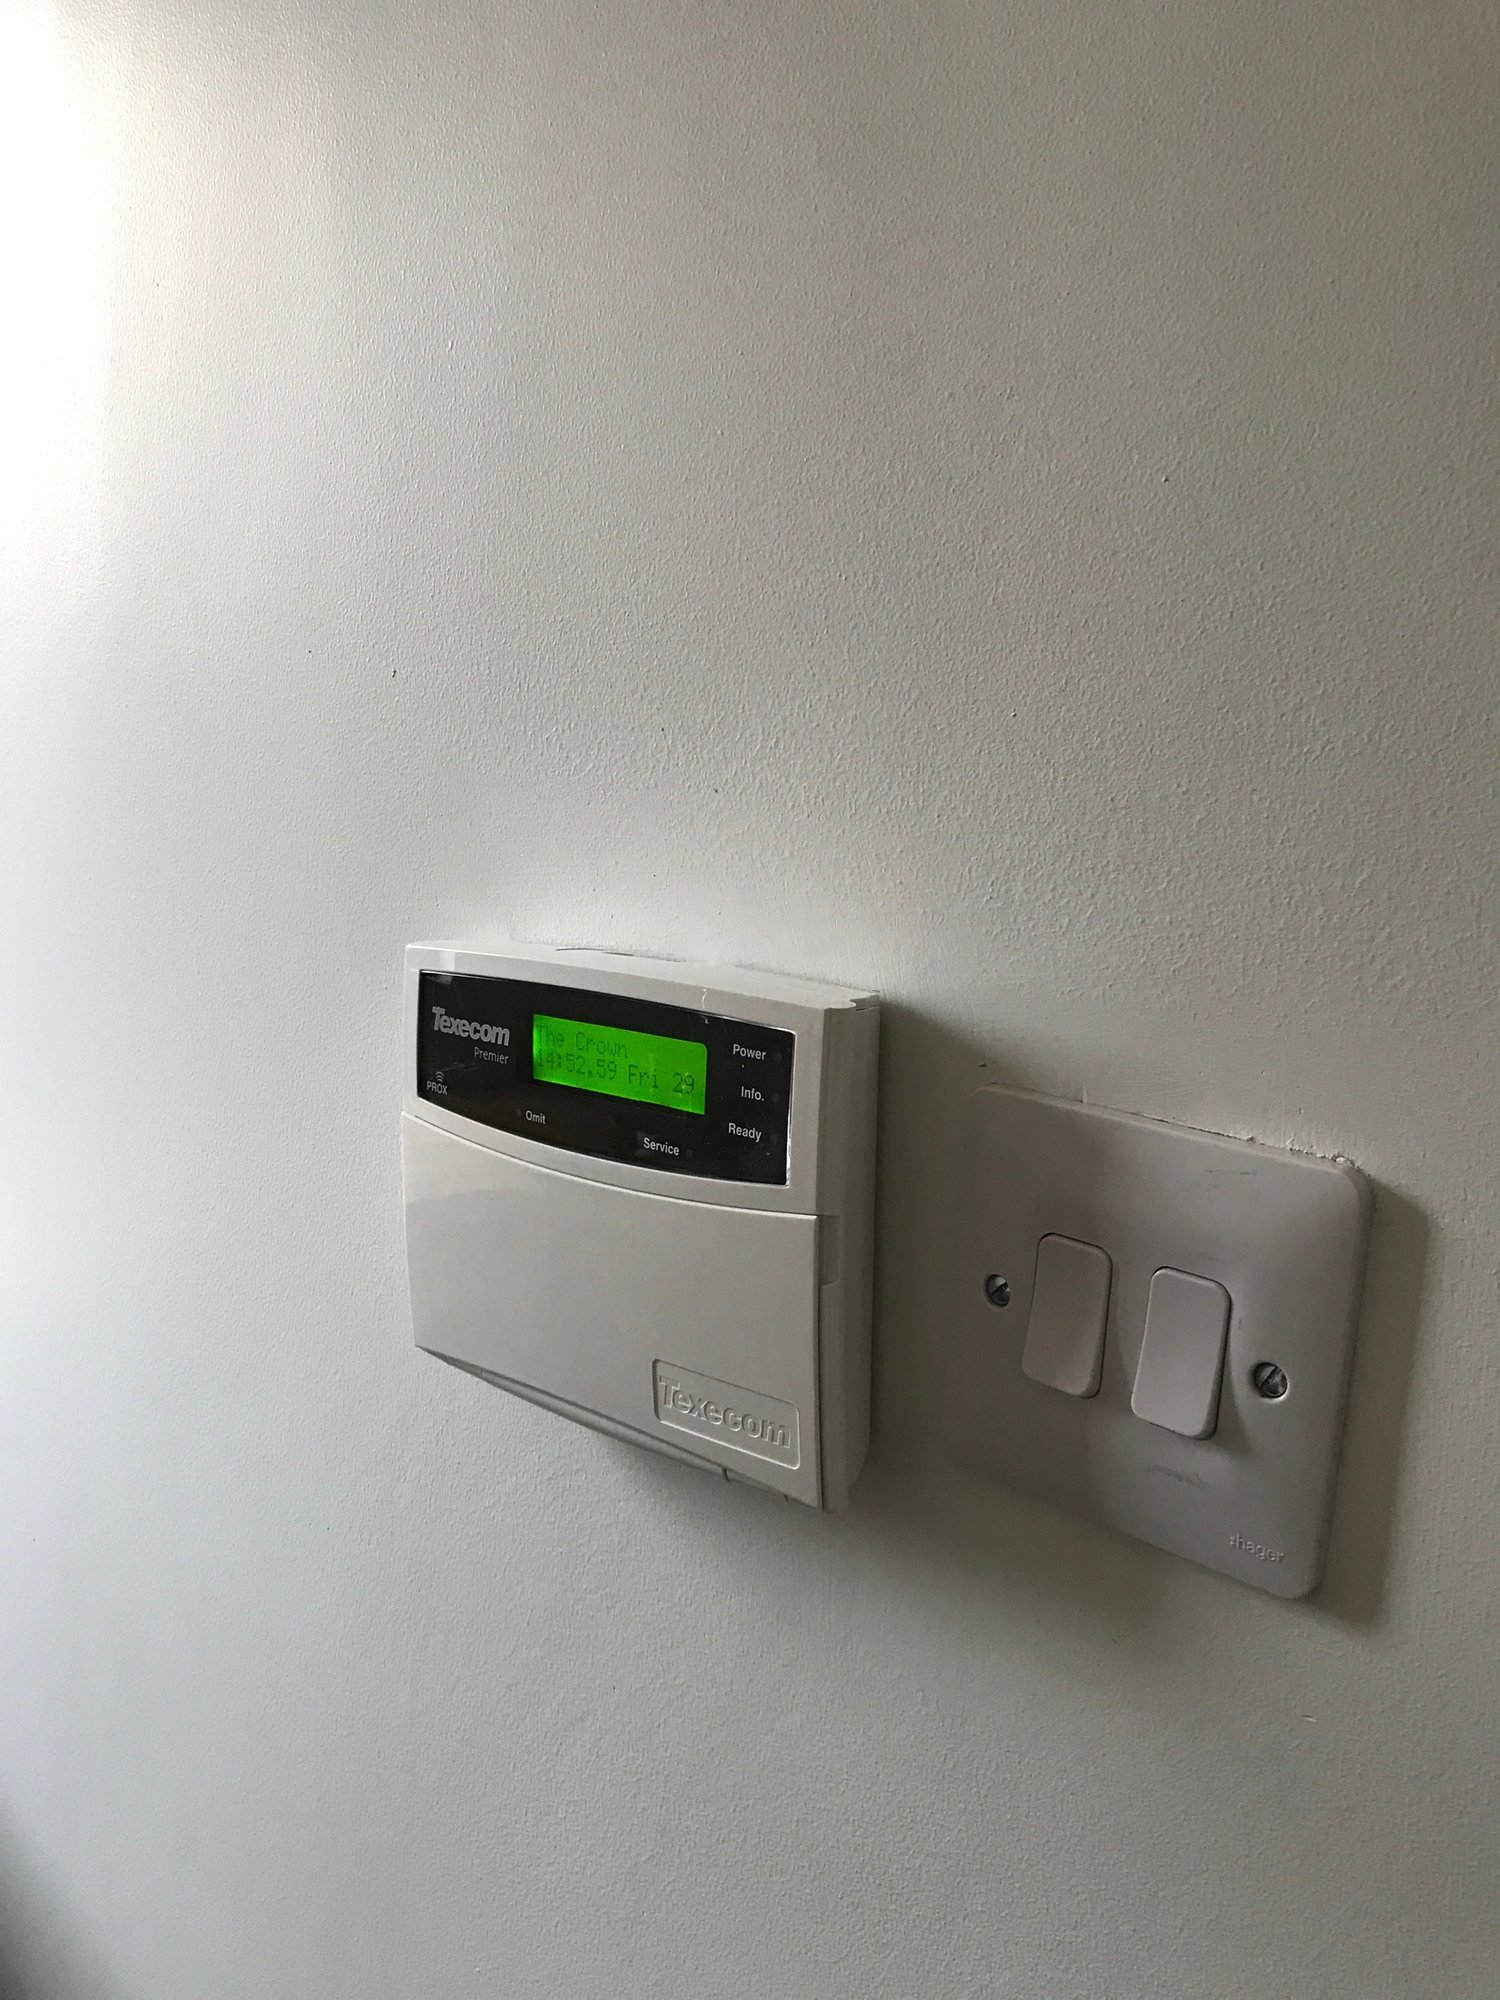 Close up of Texecom alarm system next to light switch